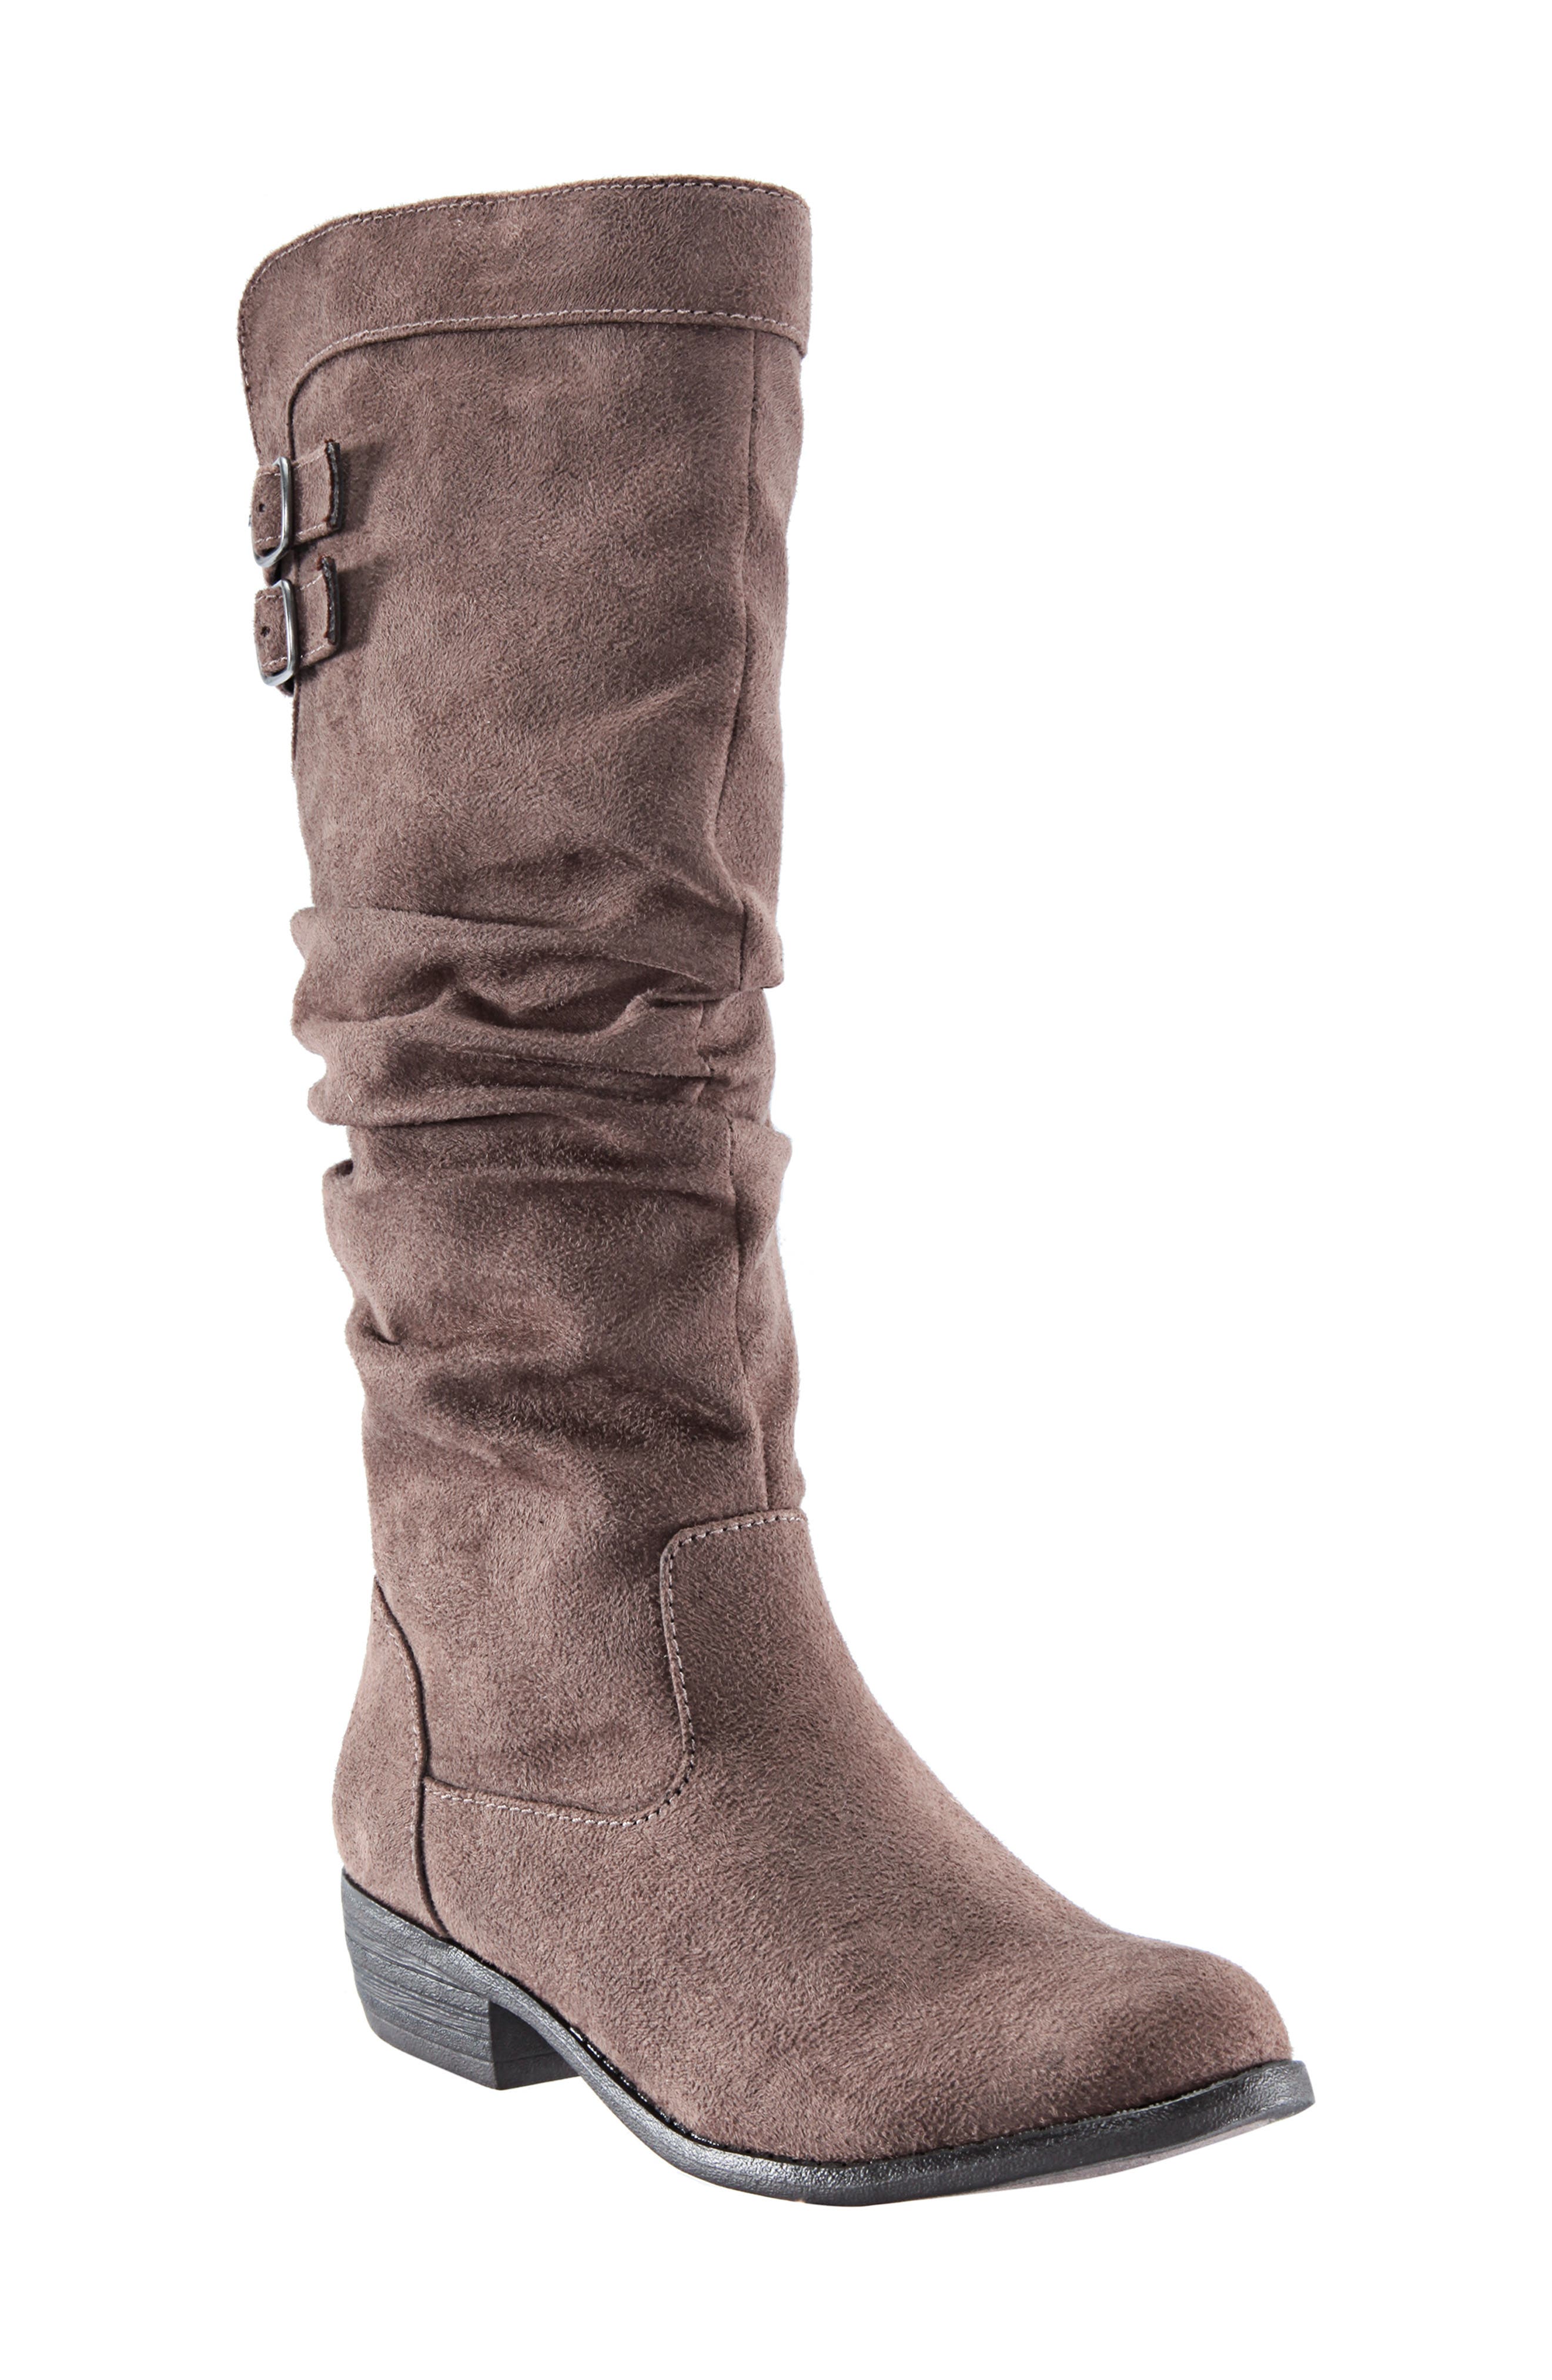 UPC 794378361596 product image for Girl's Nina Gilda Tall Slouchy Boot, Size 3 M - Beige | upcitemdb.com